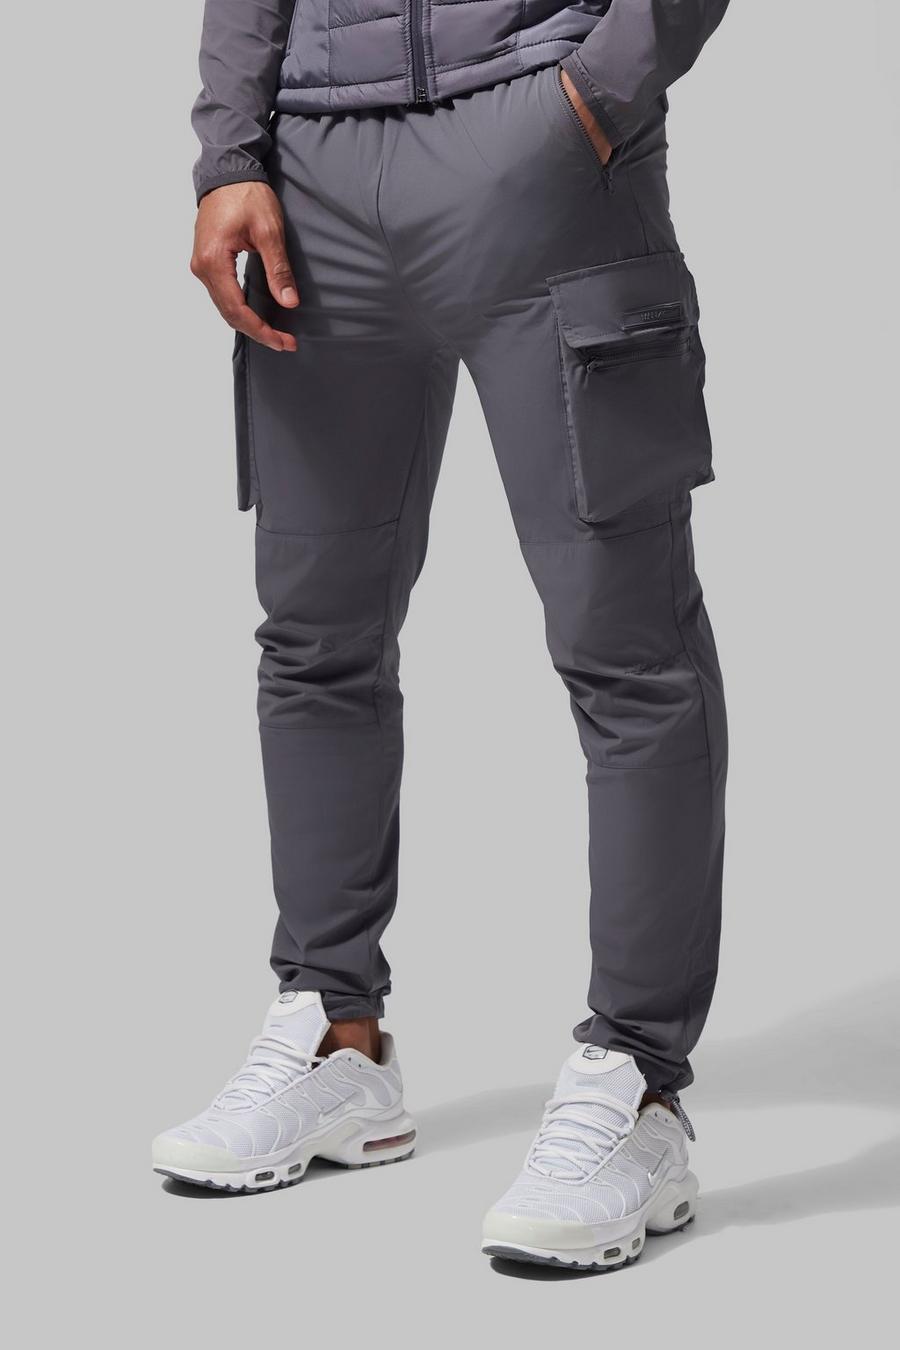 Pantaloni tuta Cargo leggeri Man Active, Charcoal grey